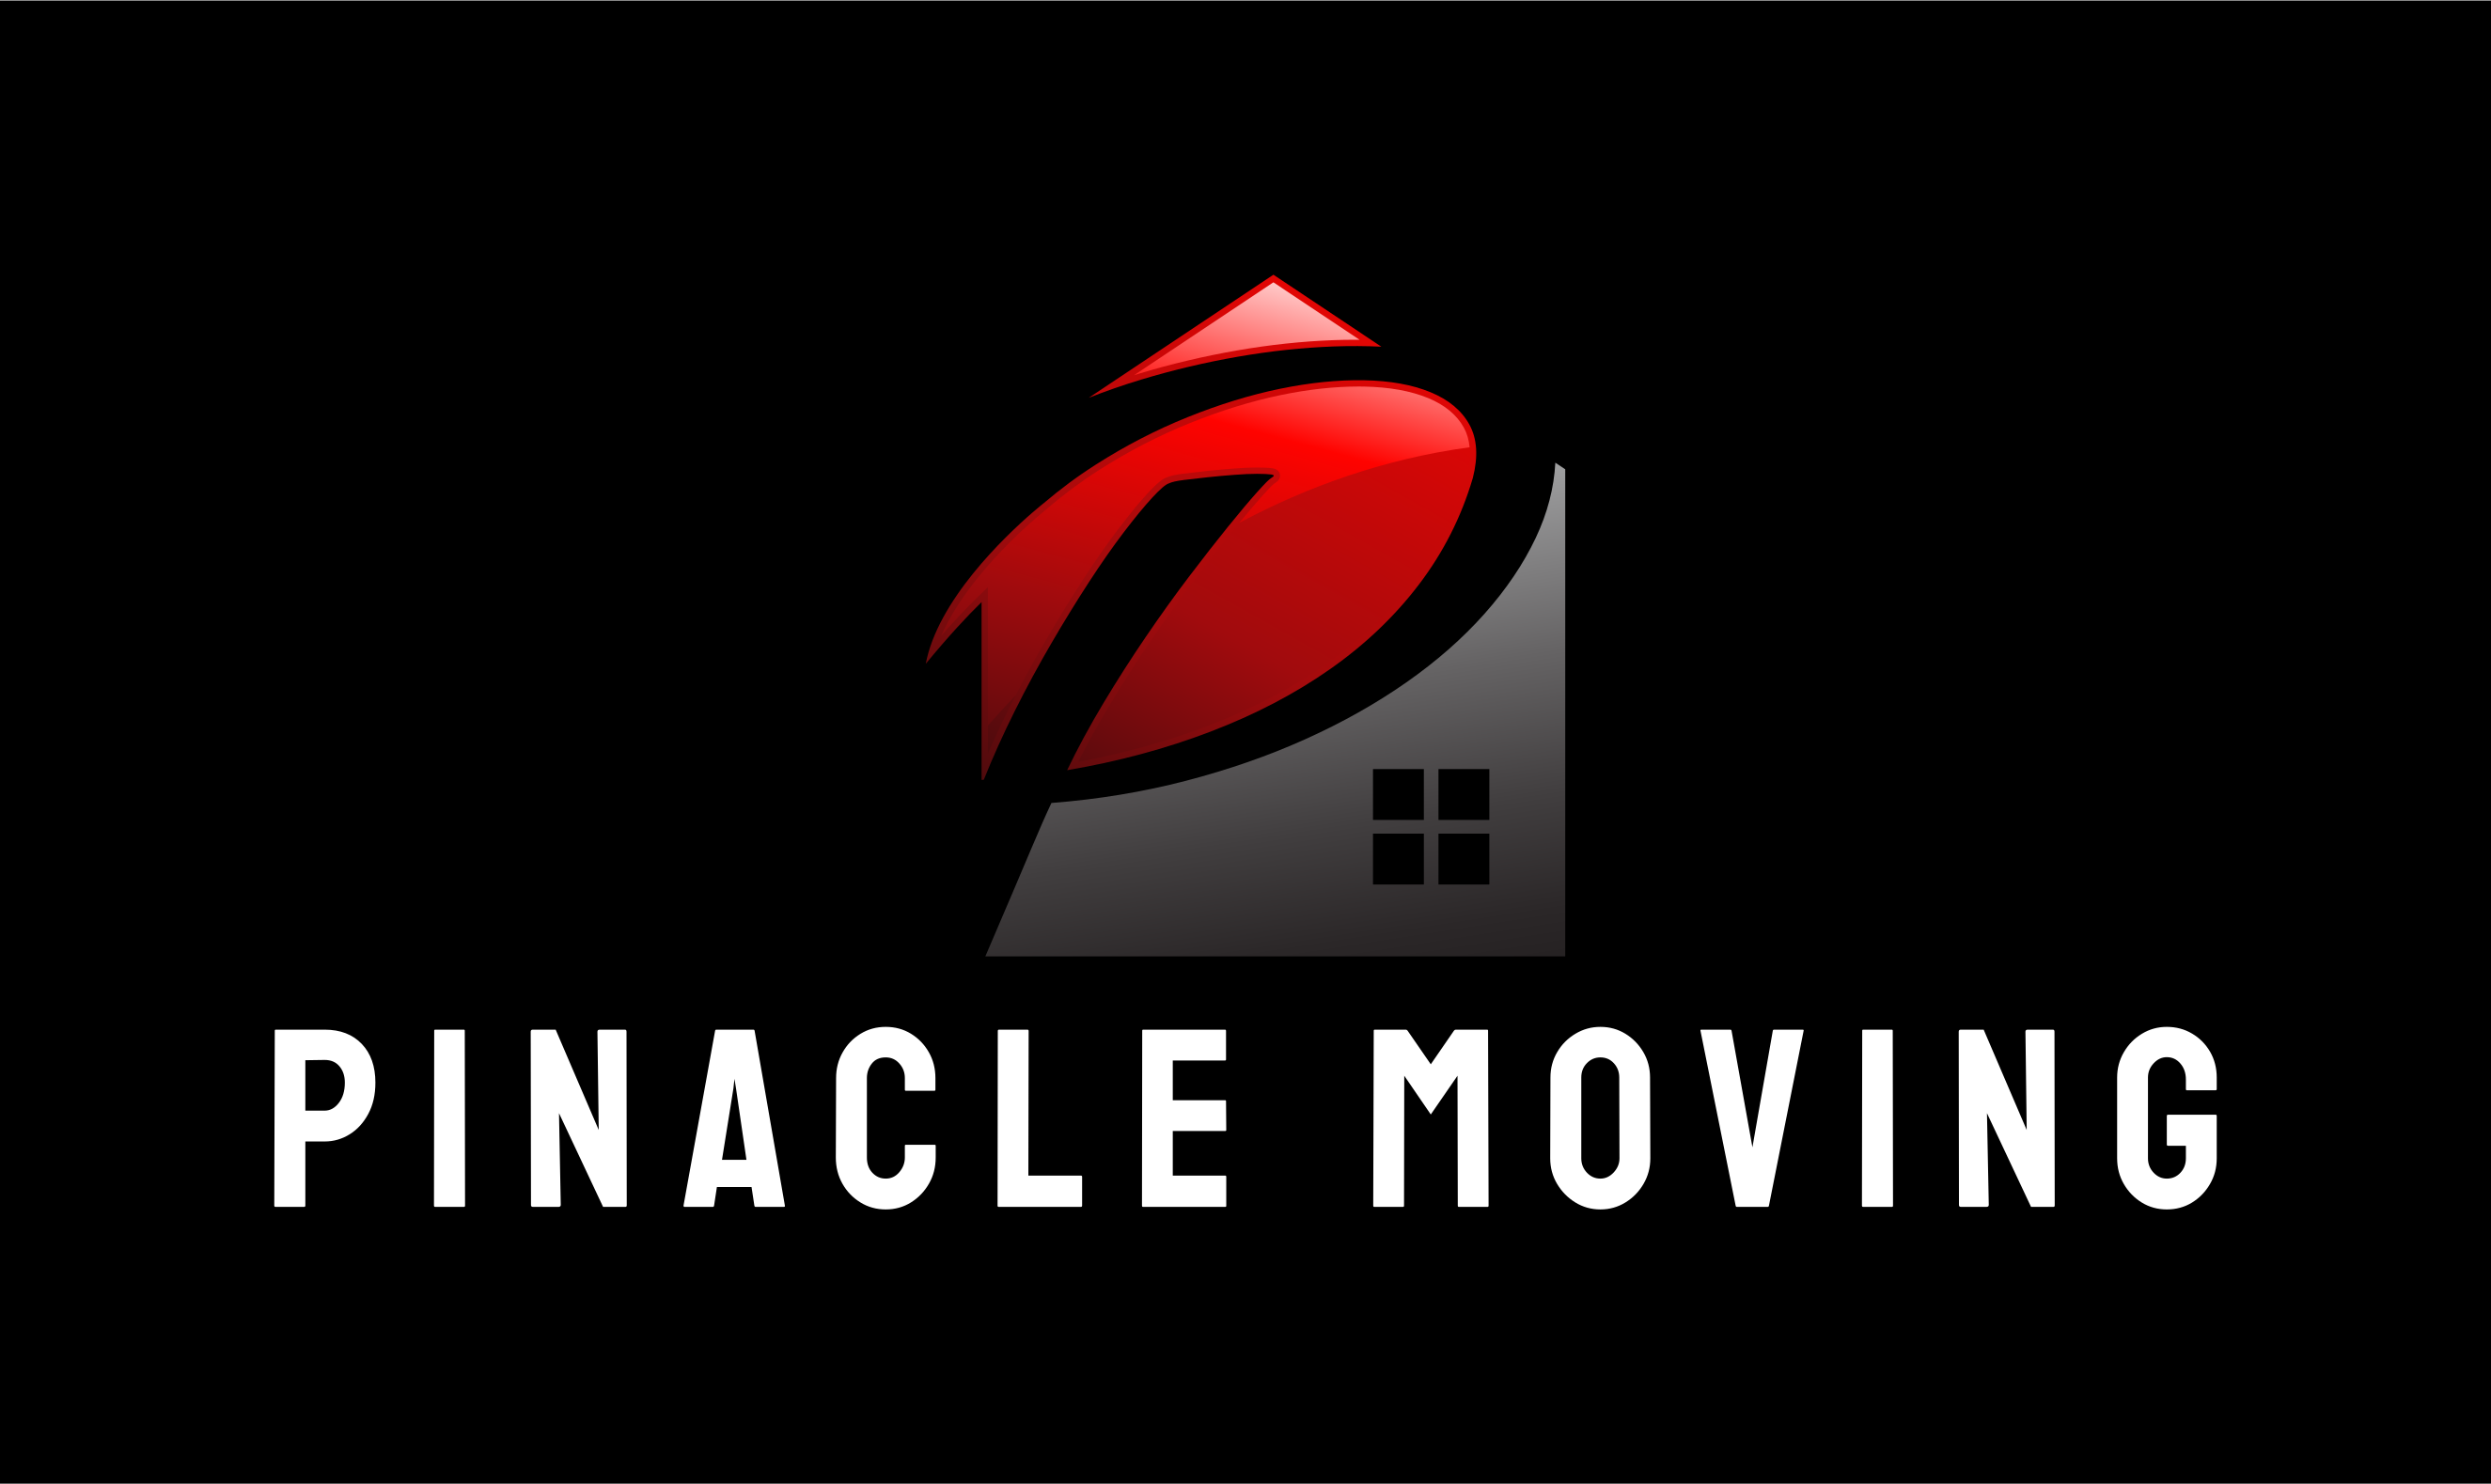 Pinnacle Moving